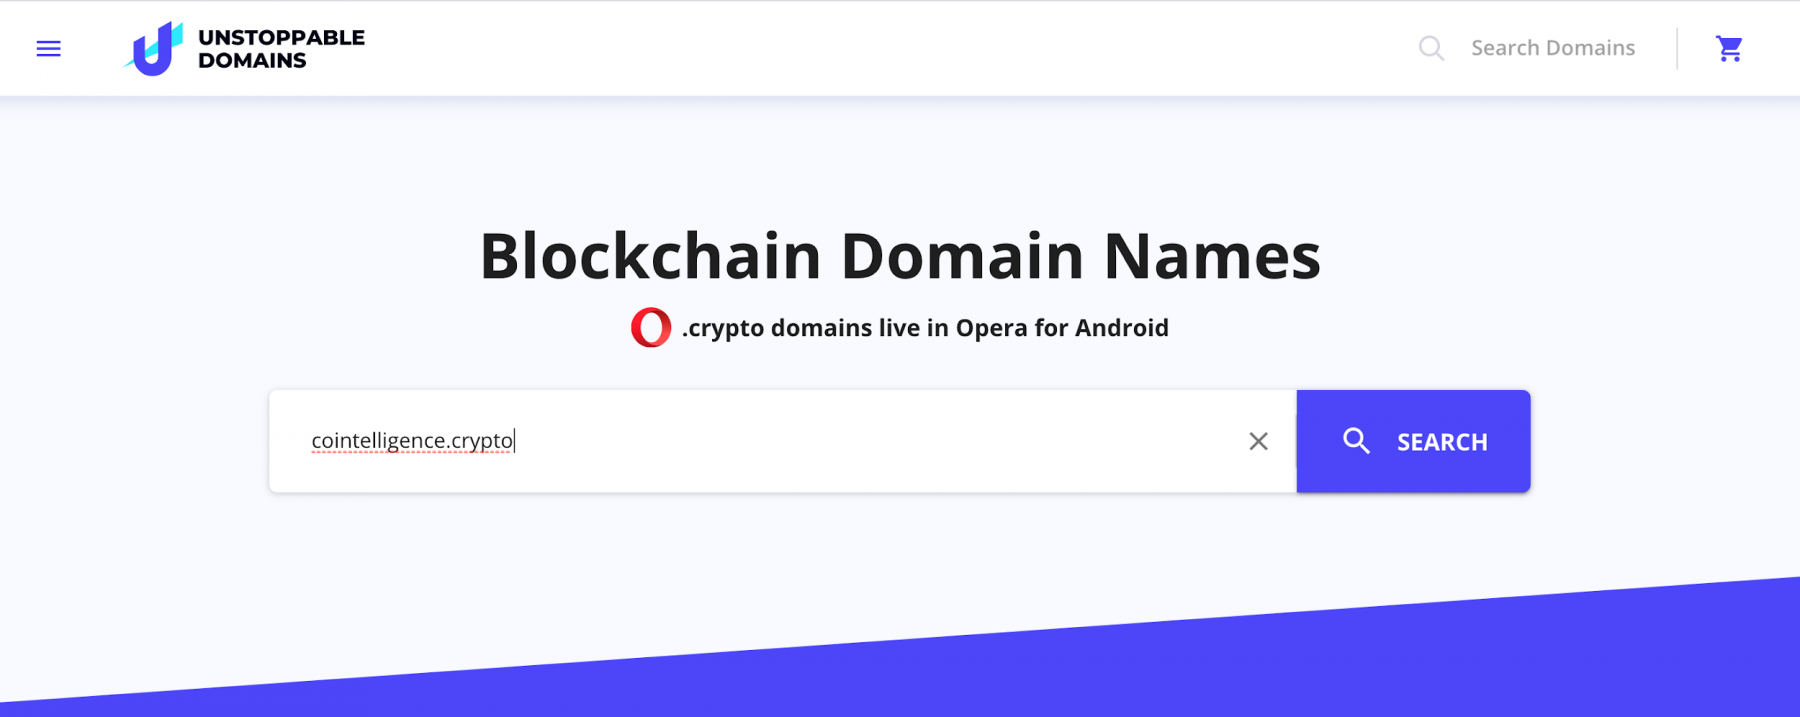 Setting up a blockchain domain